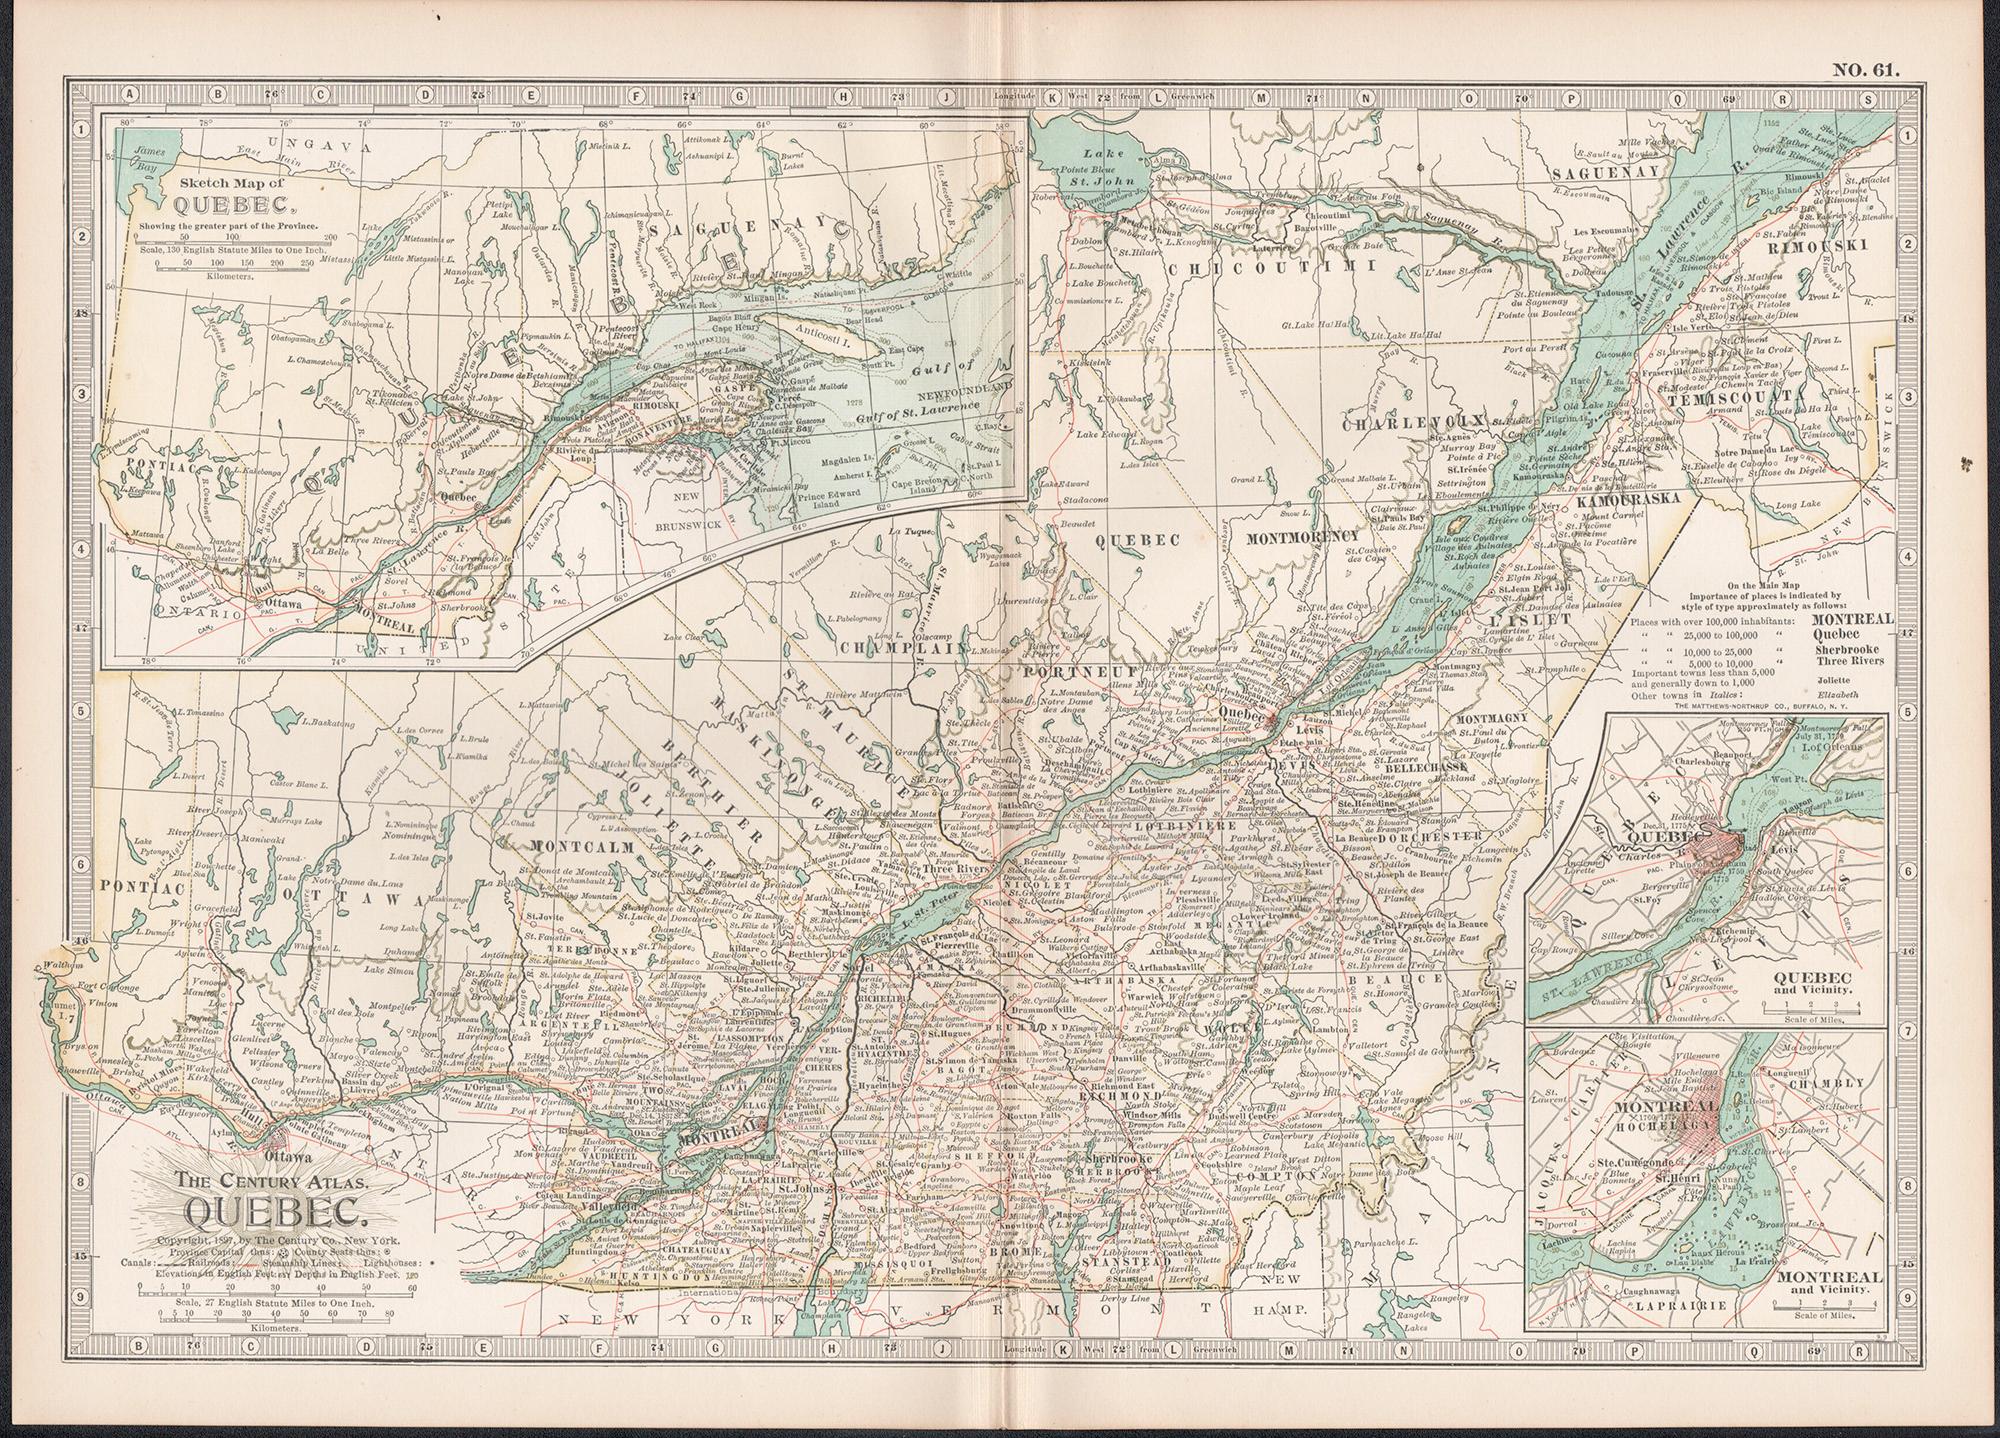 Quebec. Canada. Century Atlas antique vintage map - Print by Unknown